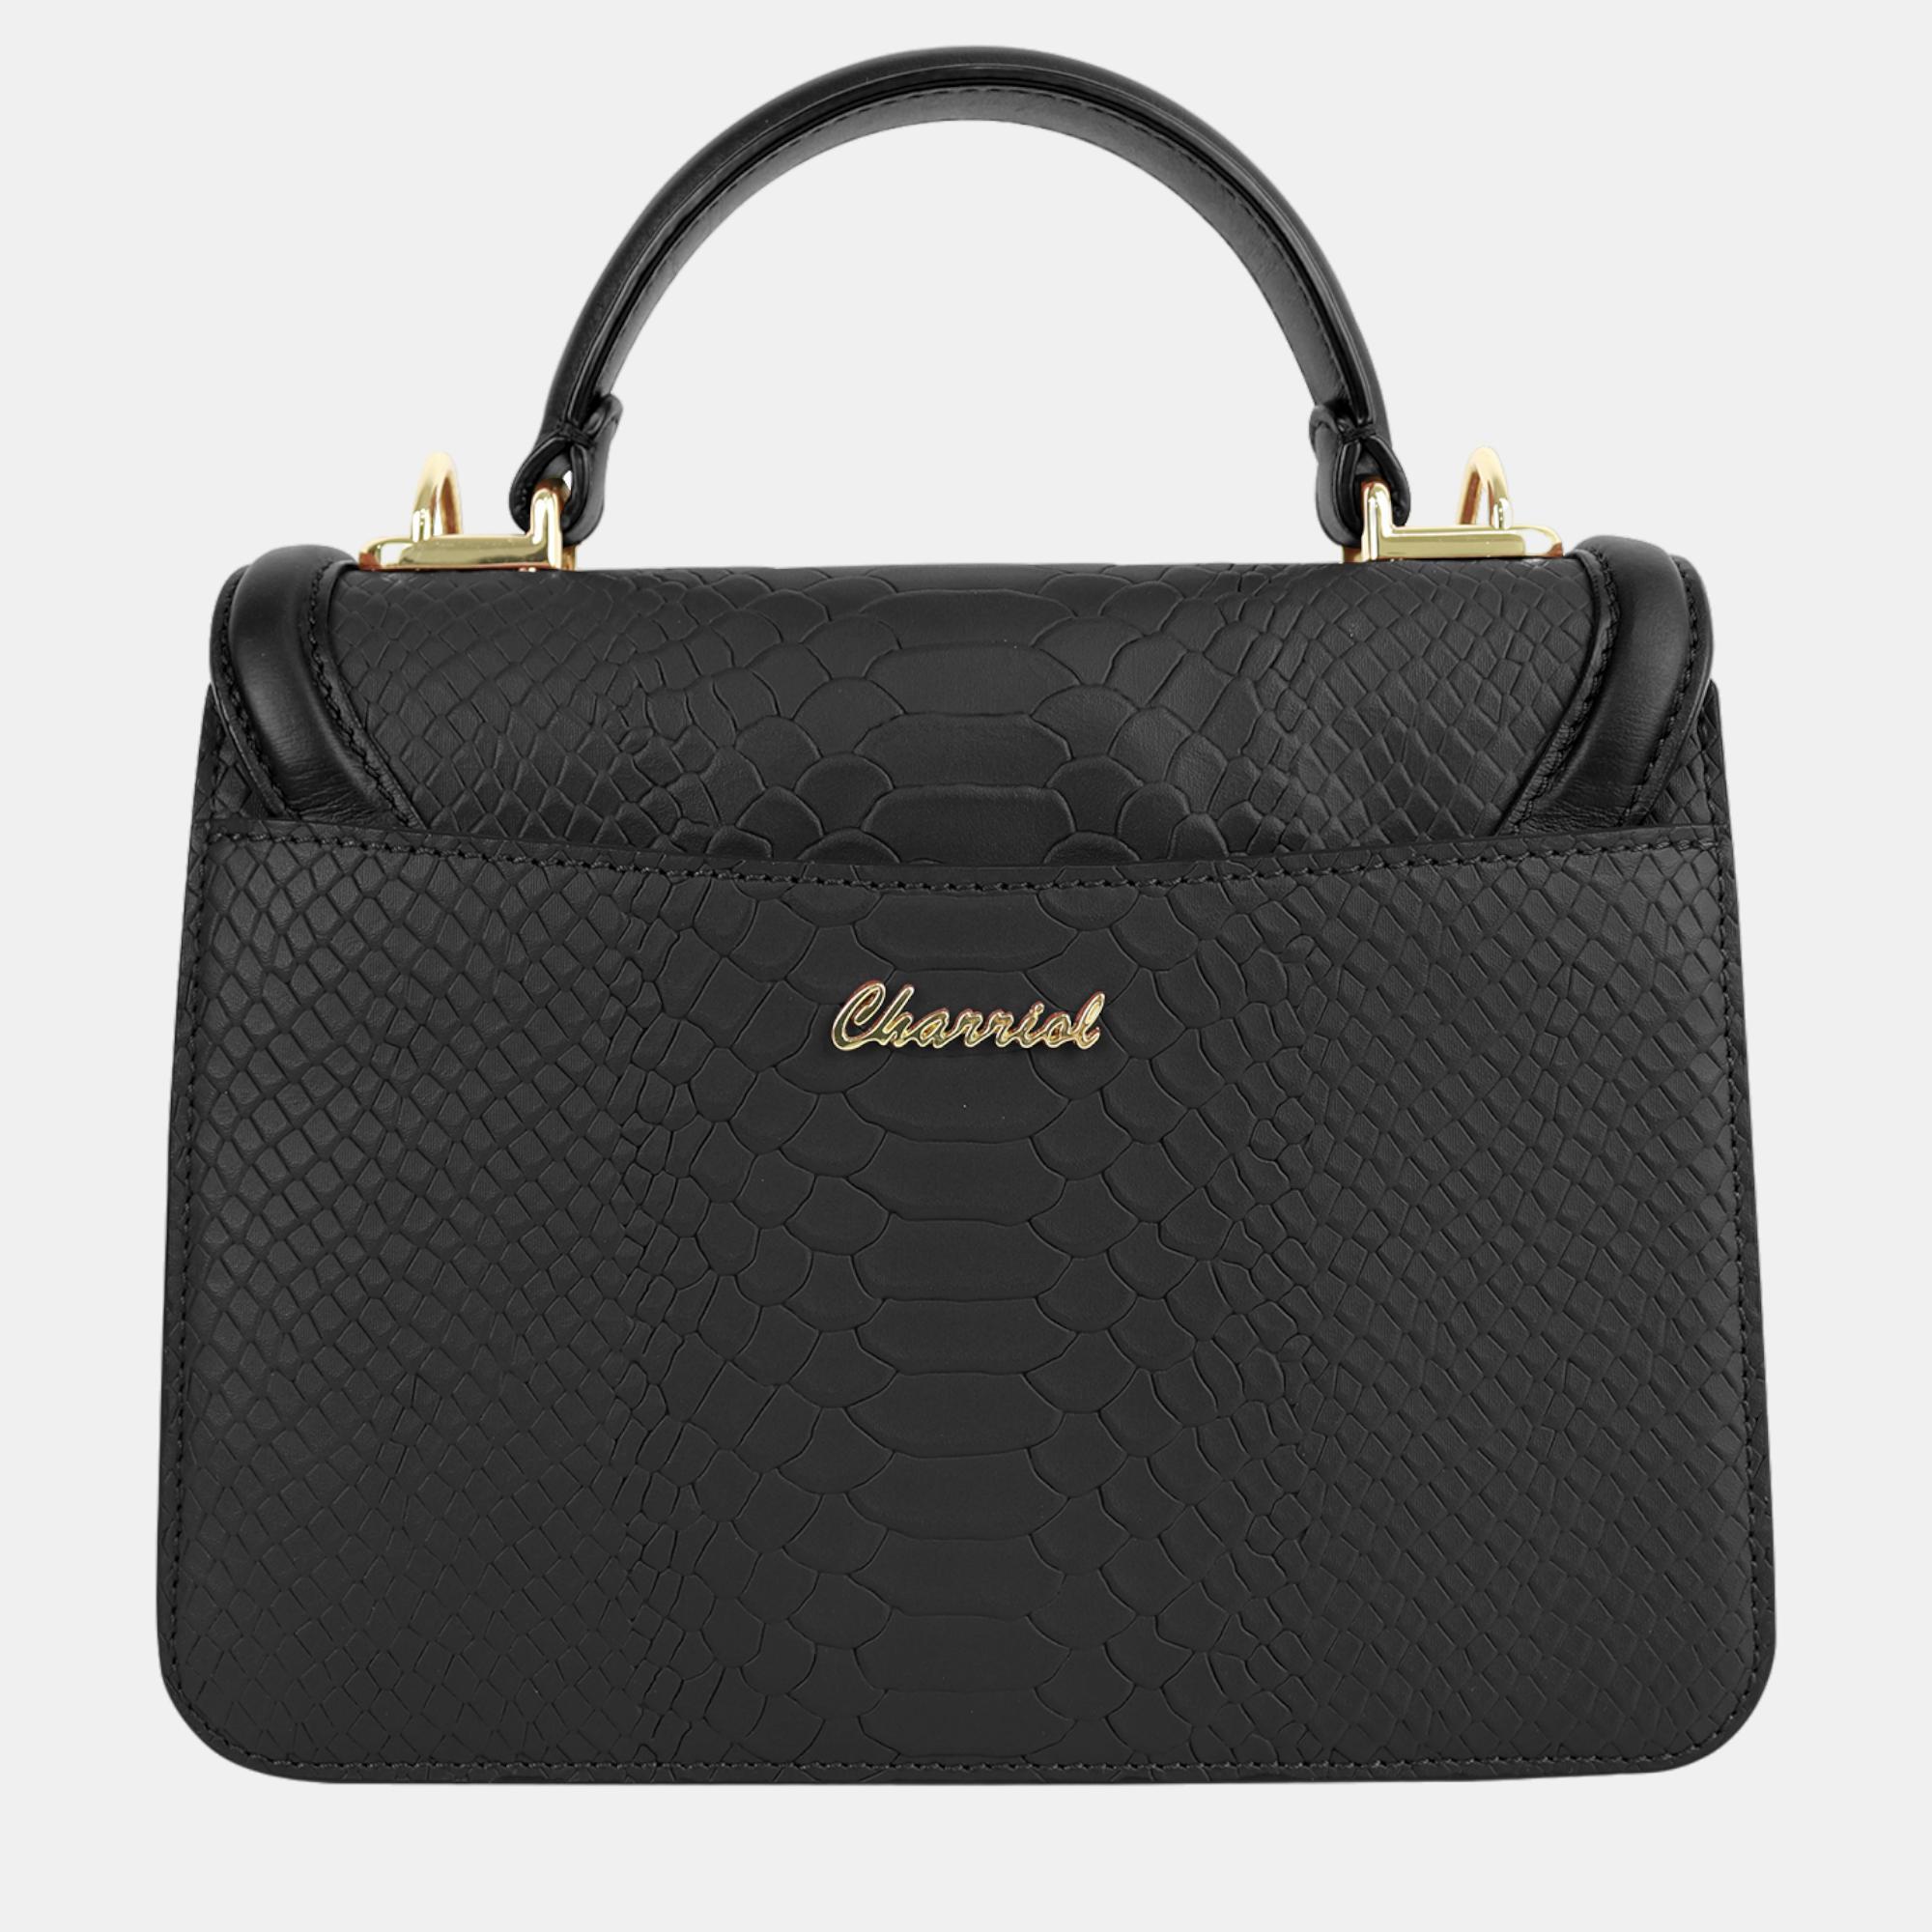 Charriol Black Leather LAETITIA Handbag